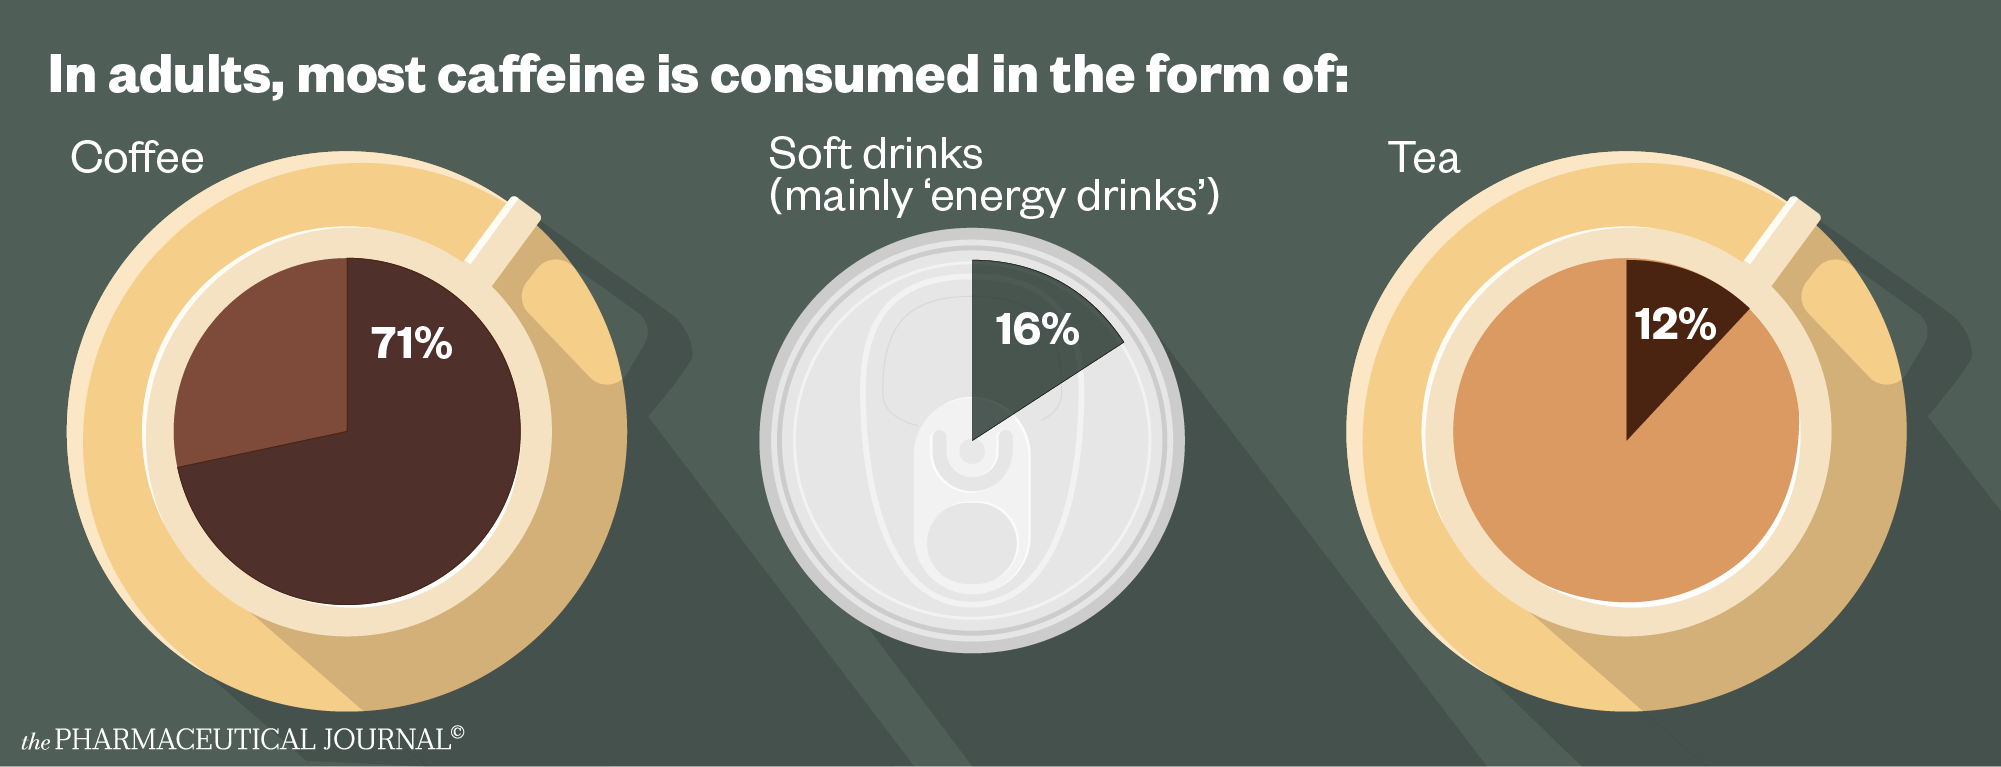 pj-caffeine-infographic_the form caffeine is consumed